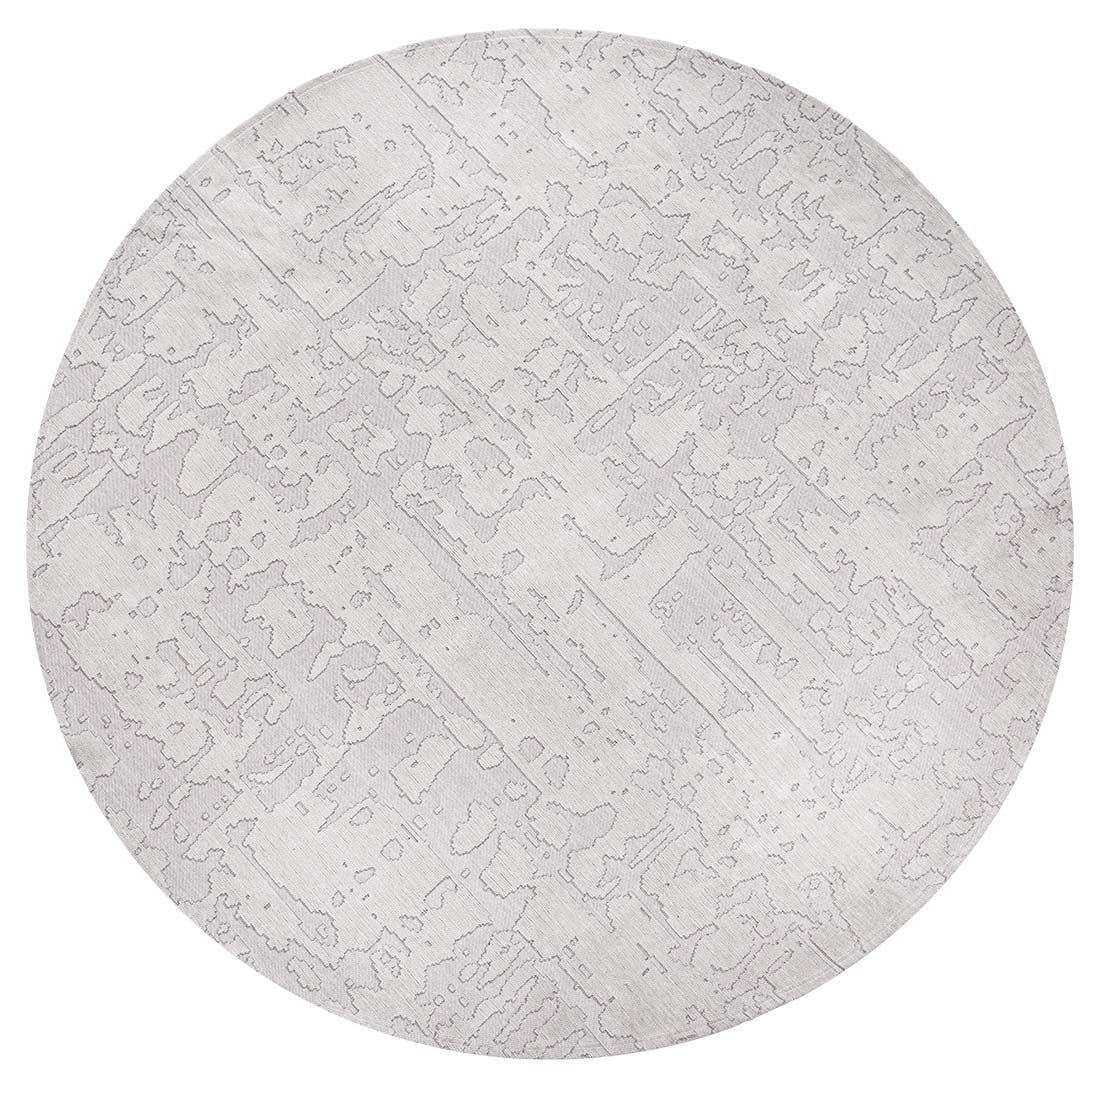 cream flatweave circle rug with subtle, organic pattern
